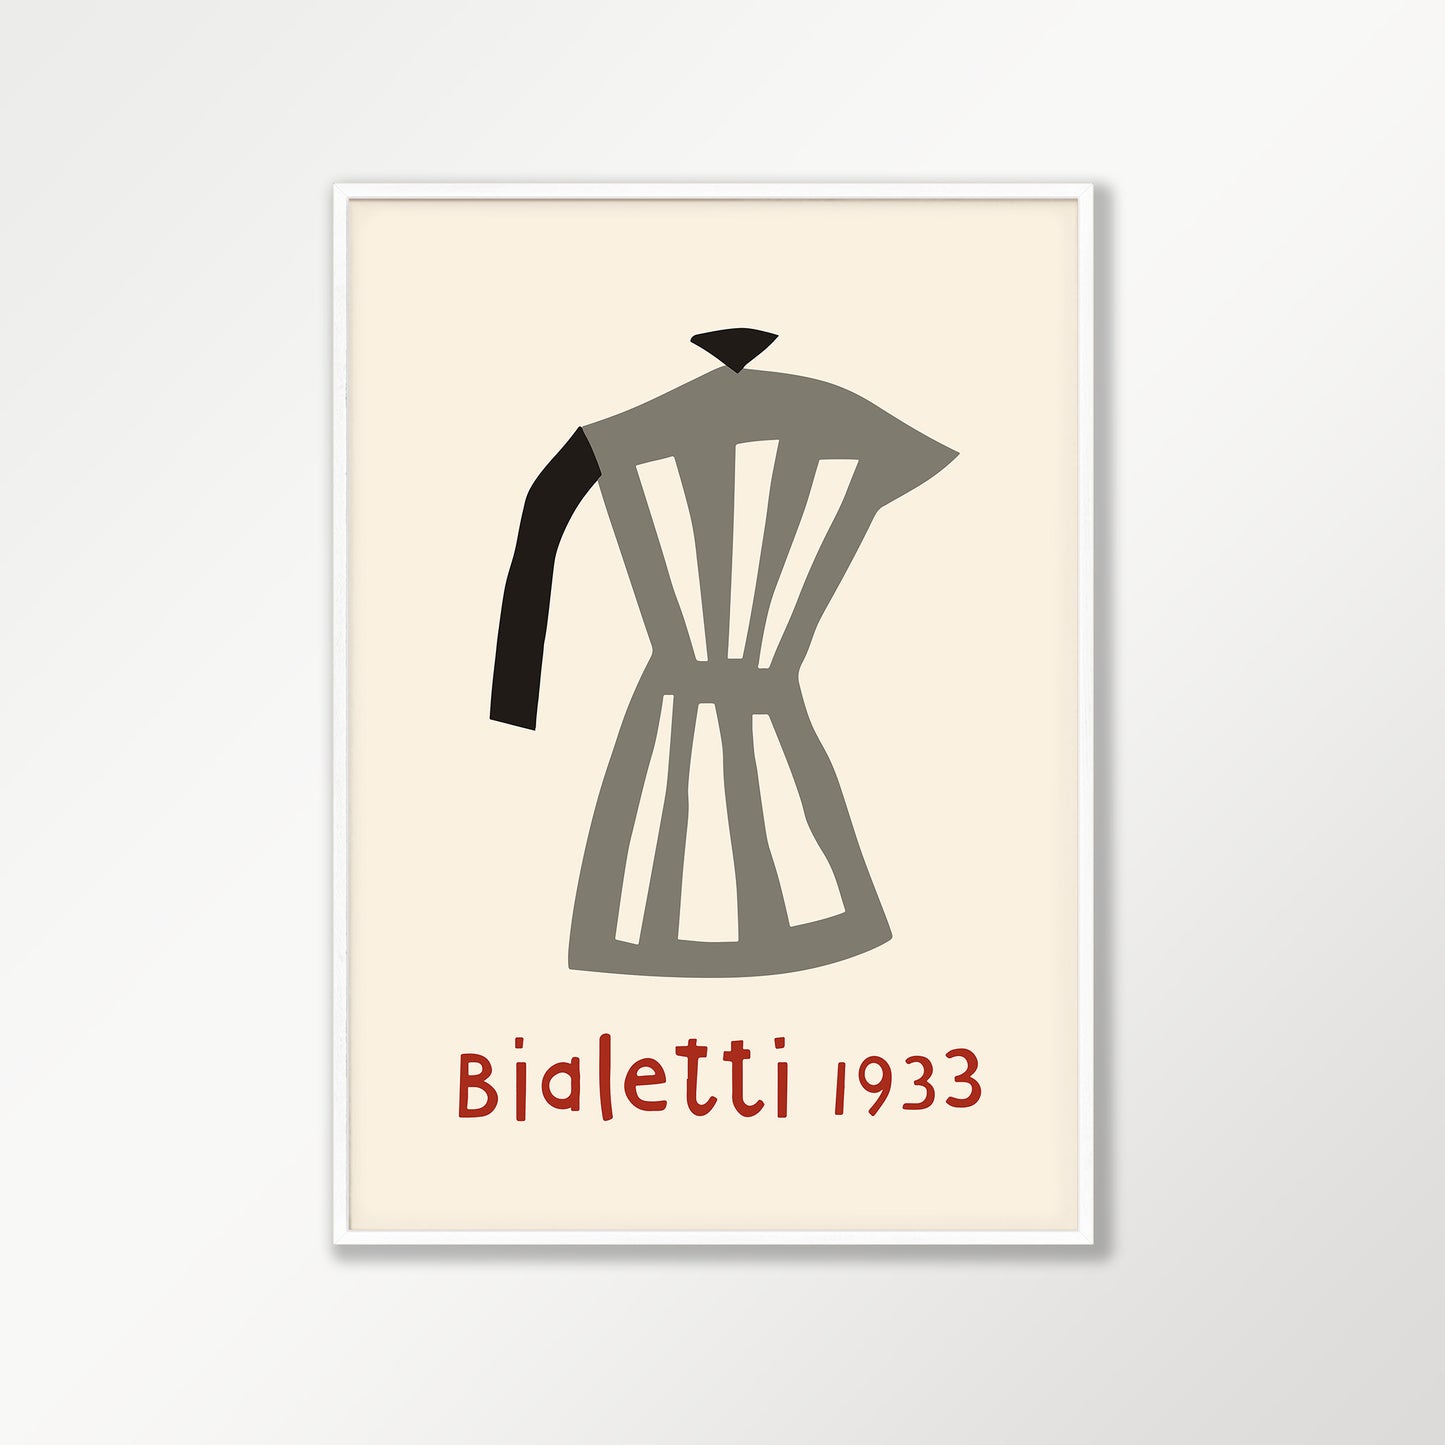 Bialetti 1933